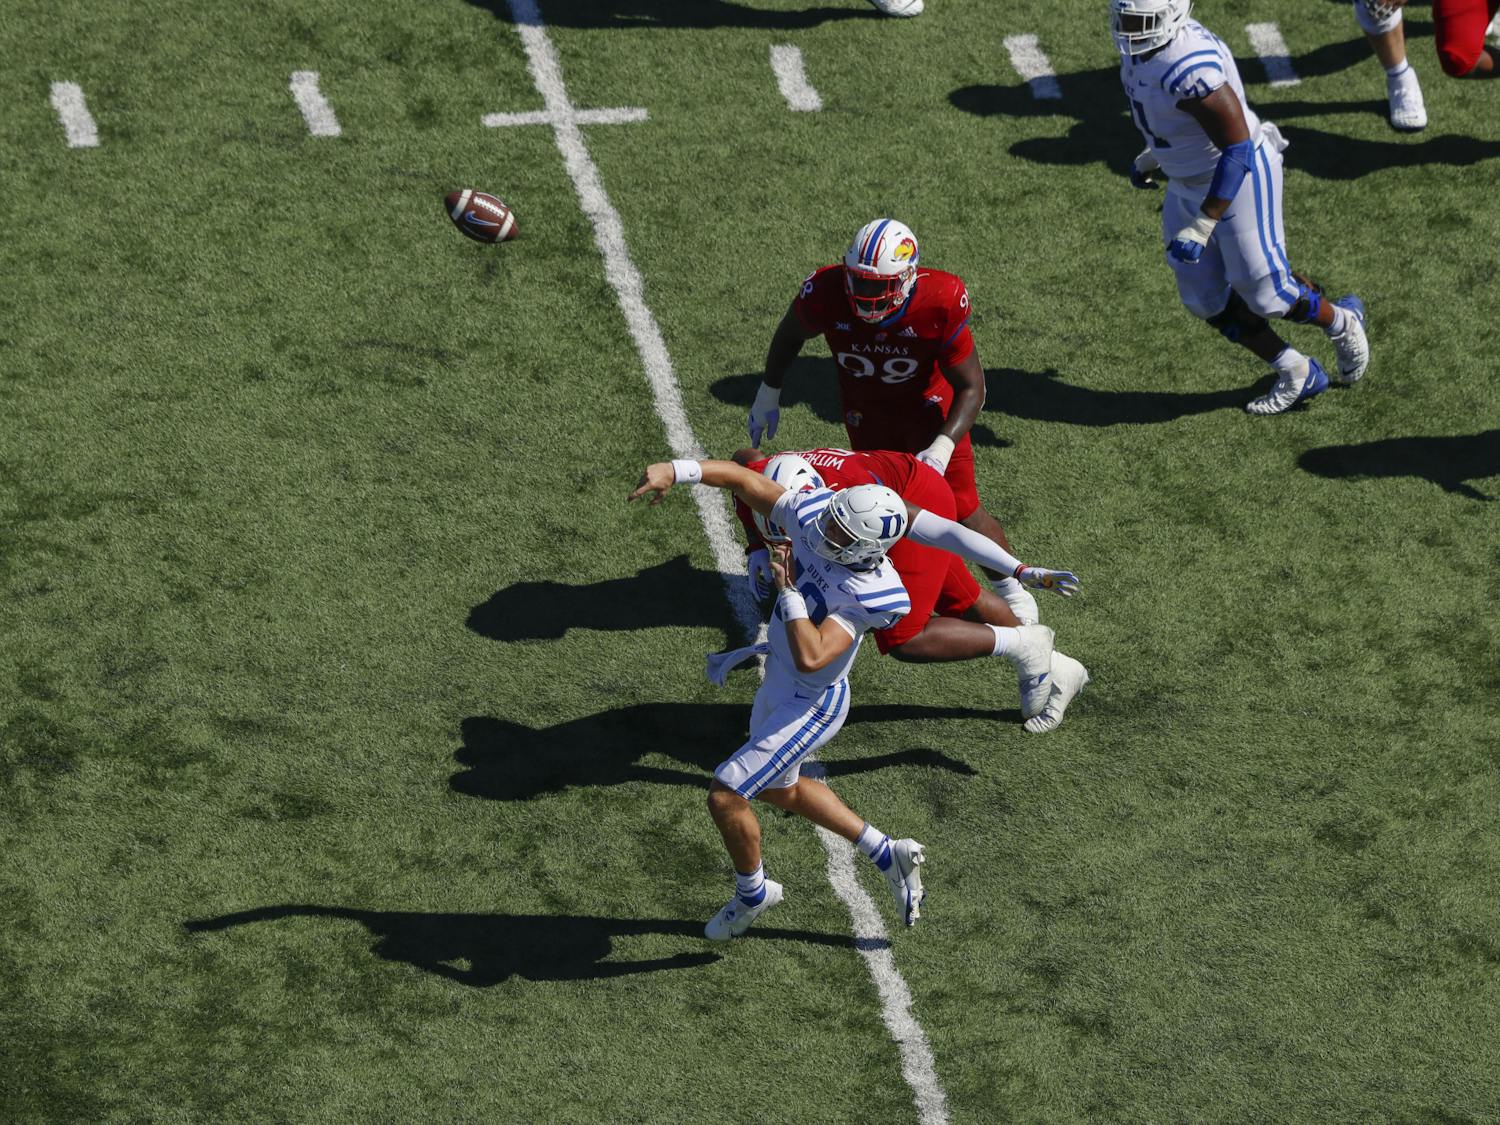 Sophomore quarterback Riley Leonard threw for 324 yards while avoiding any interceptions.